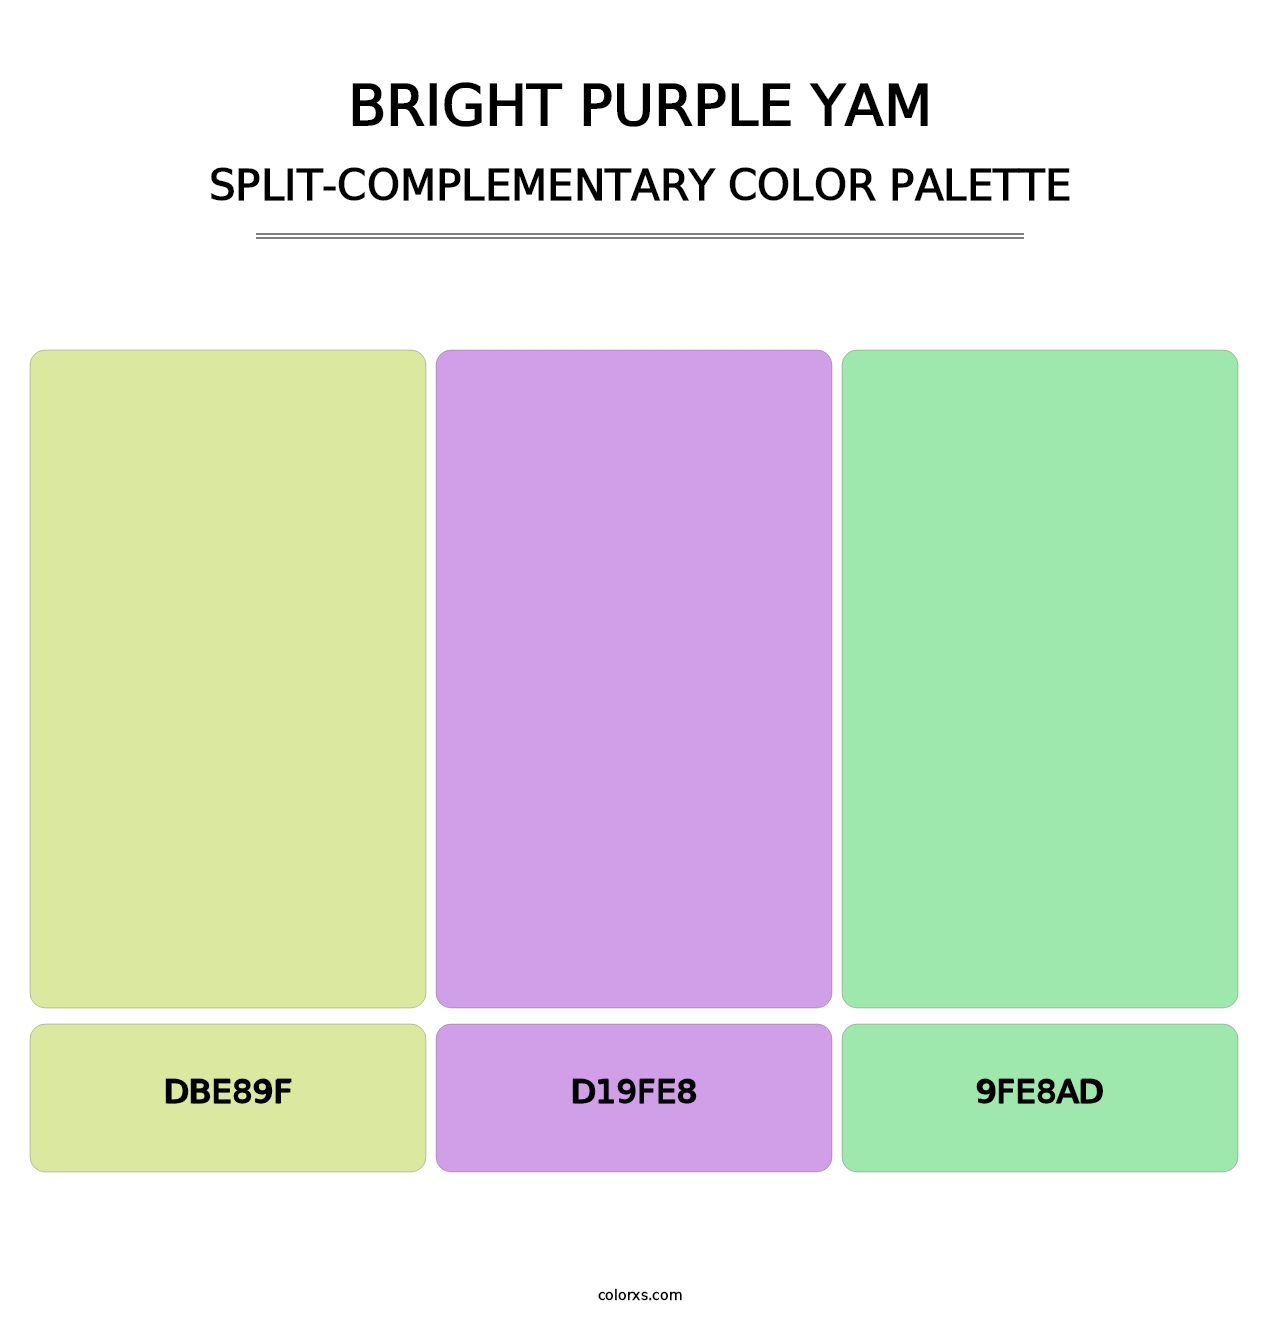 Bright Purple Yam - Split-Complementary Color Palette